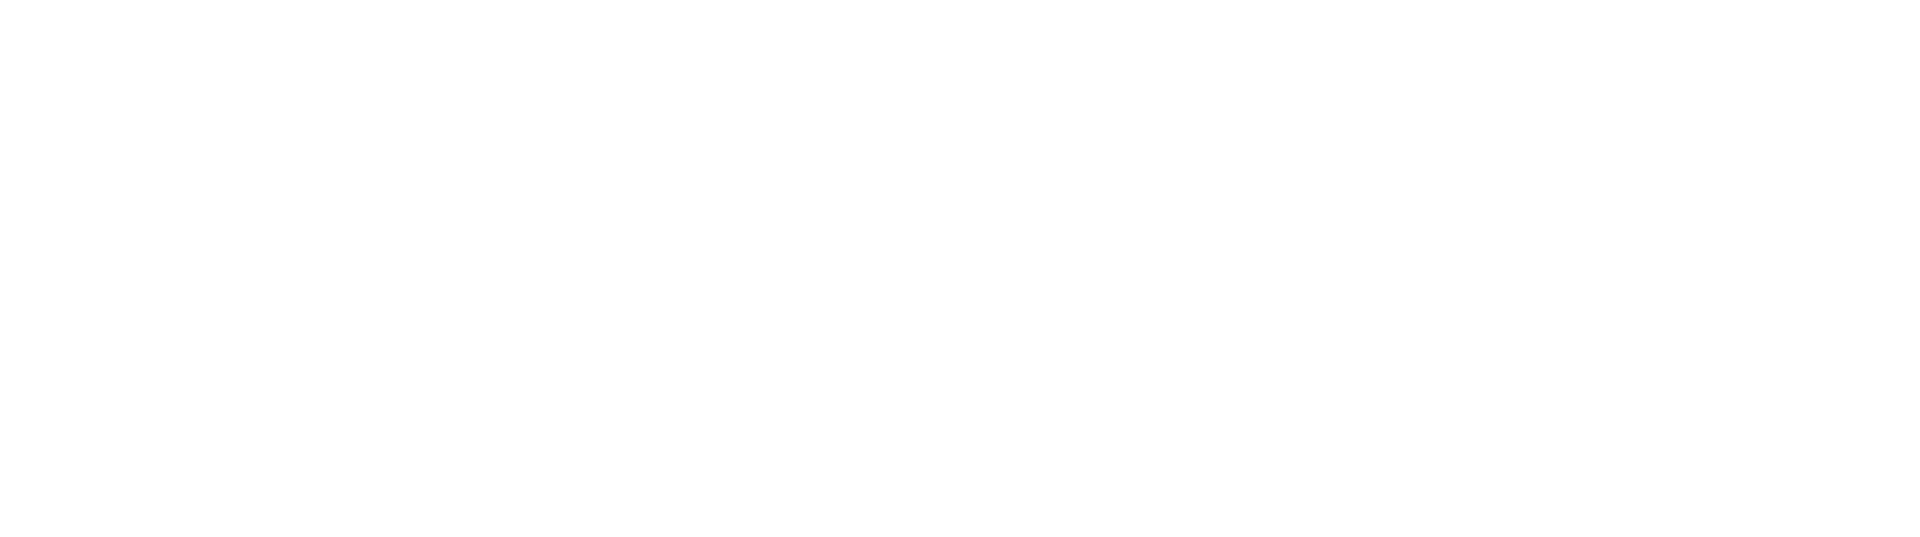 Unicef Logo White